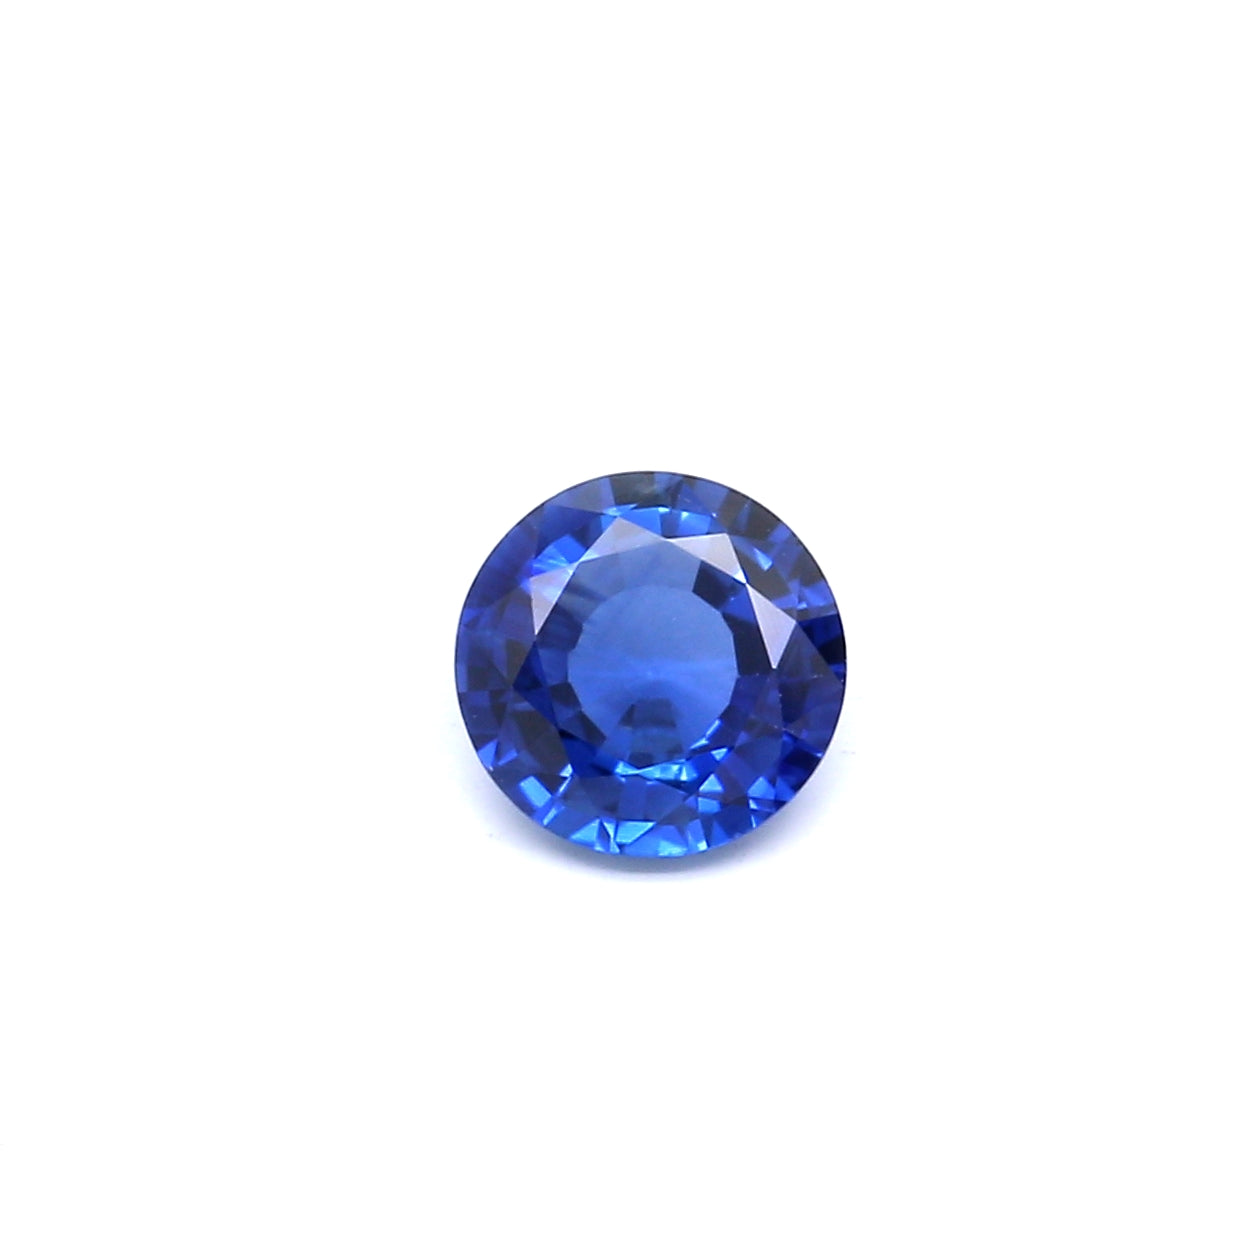 1.14ct Round Sapphire, Heated, Sri Lanka - 6.54 x 6.58 x 3.21mm